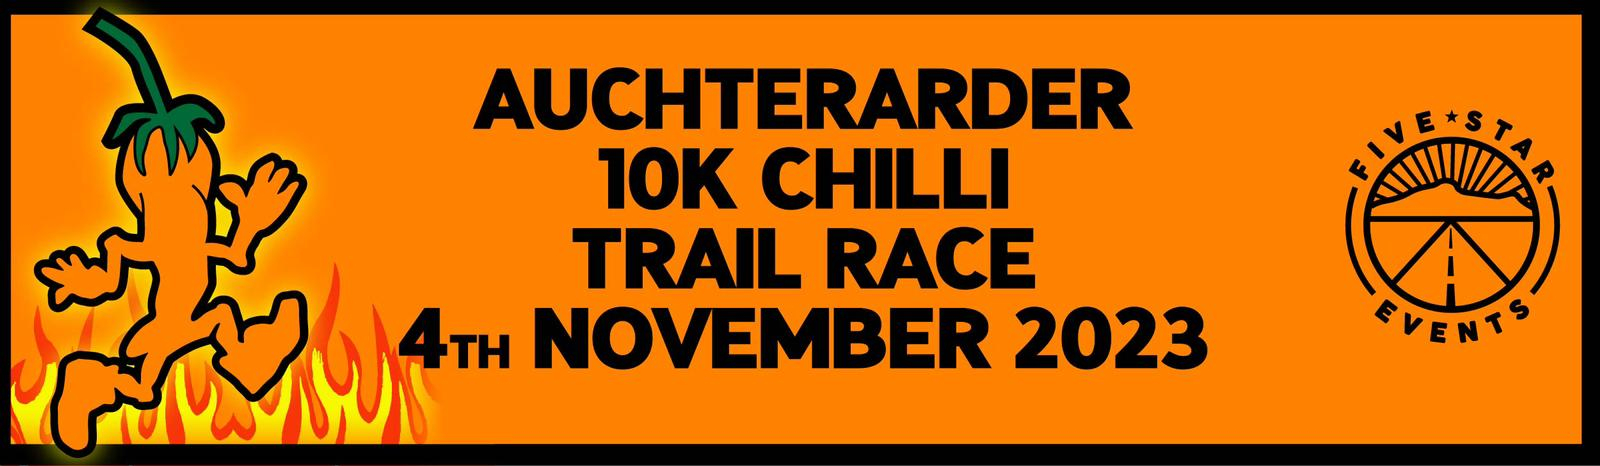 Auchterarder 10K Chilli Trail Race 2023 carousel image 1